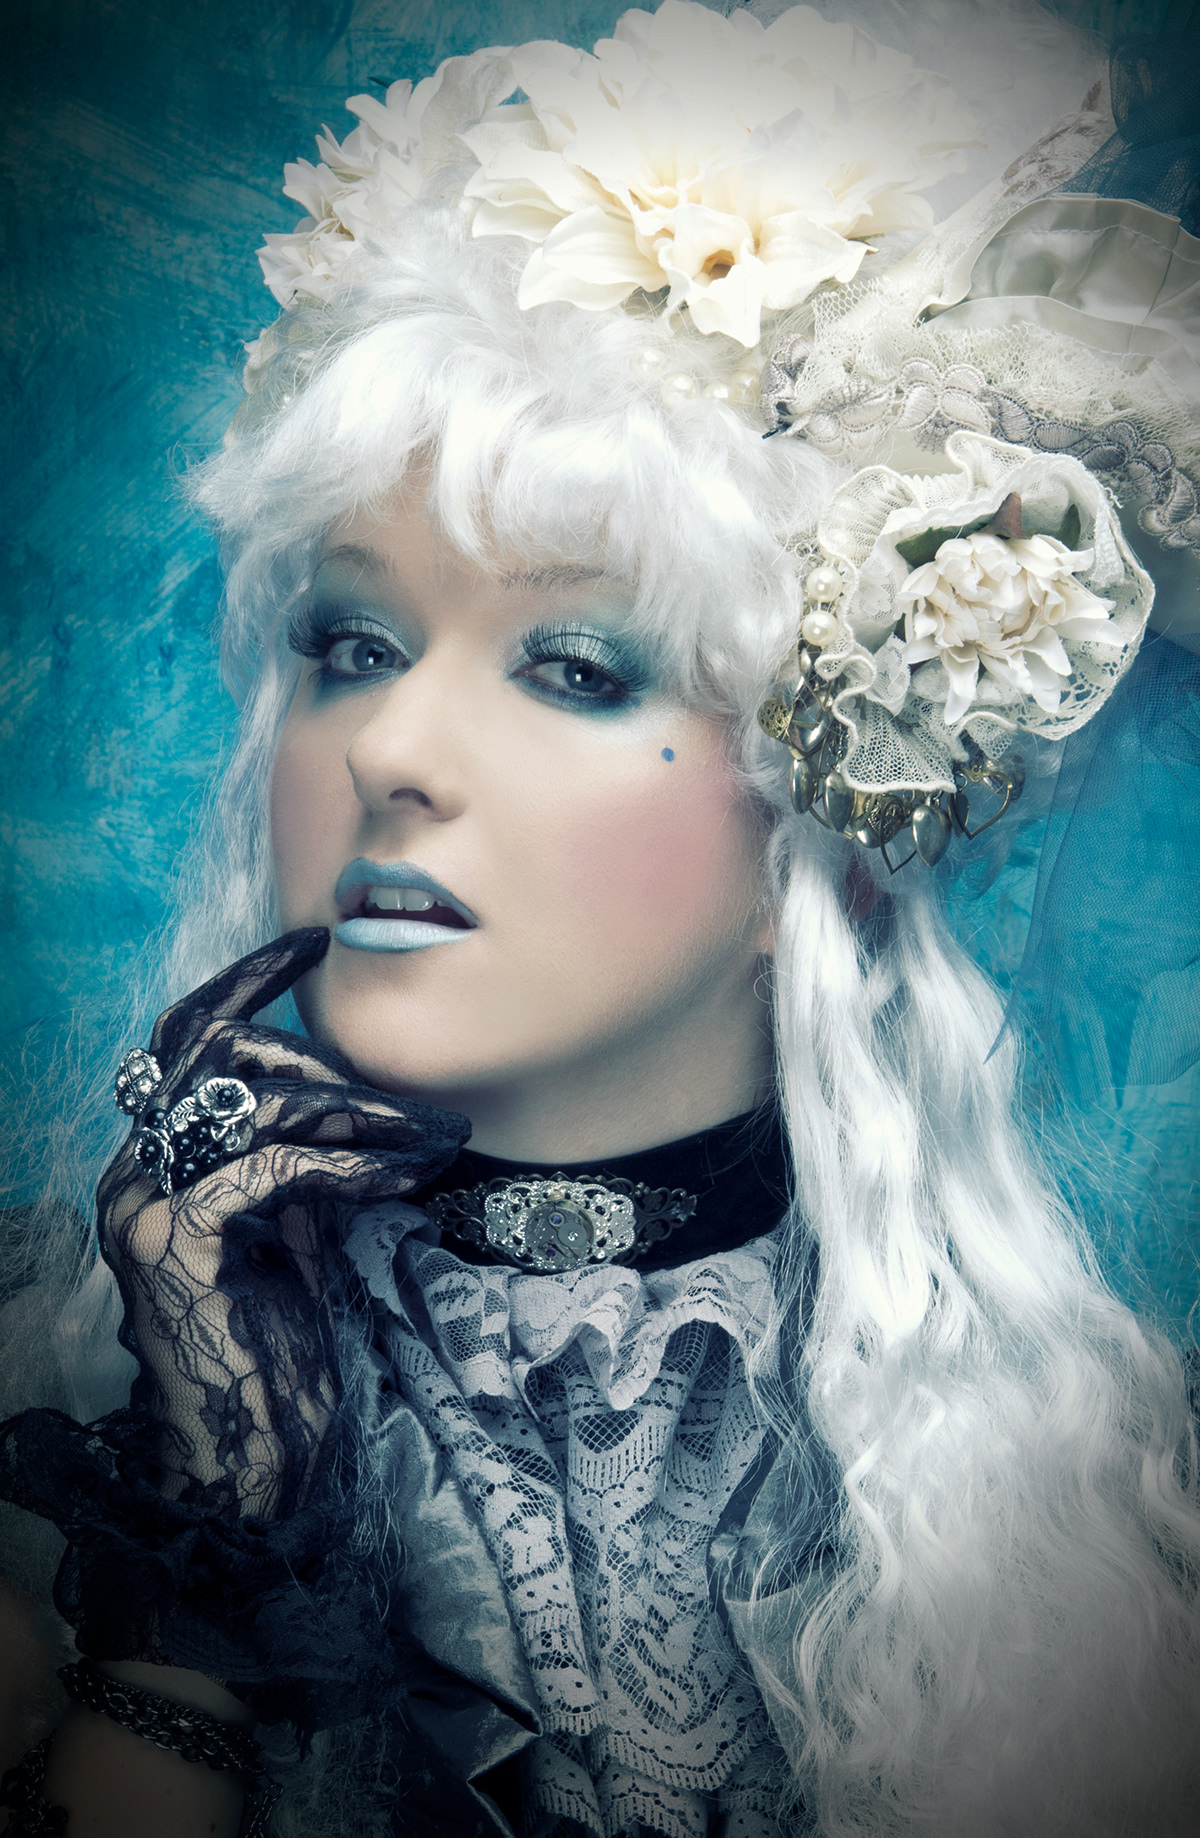 wigs makeup glamour fantasy chic lipstick Style Rennaissance